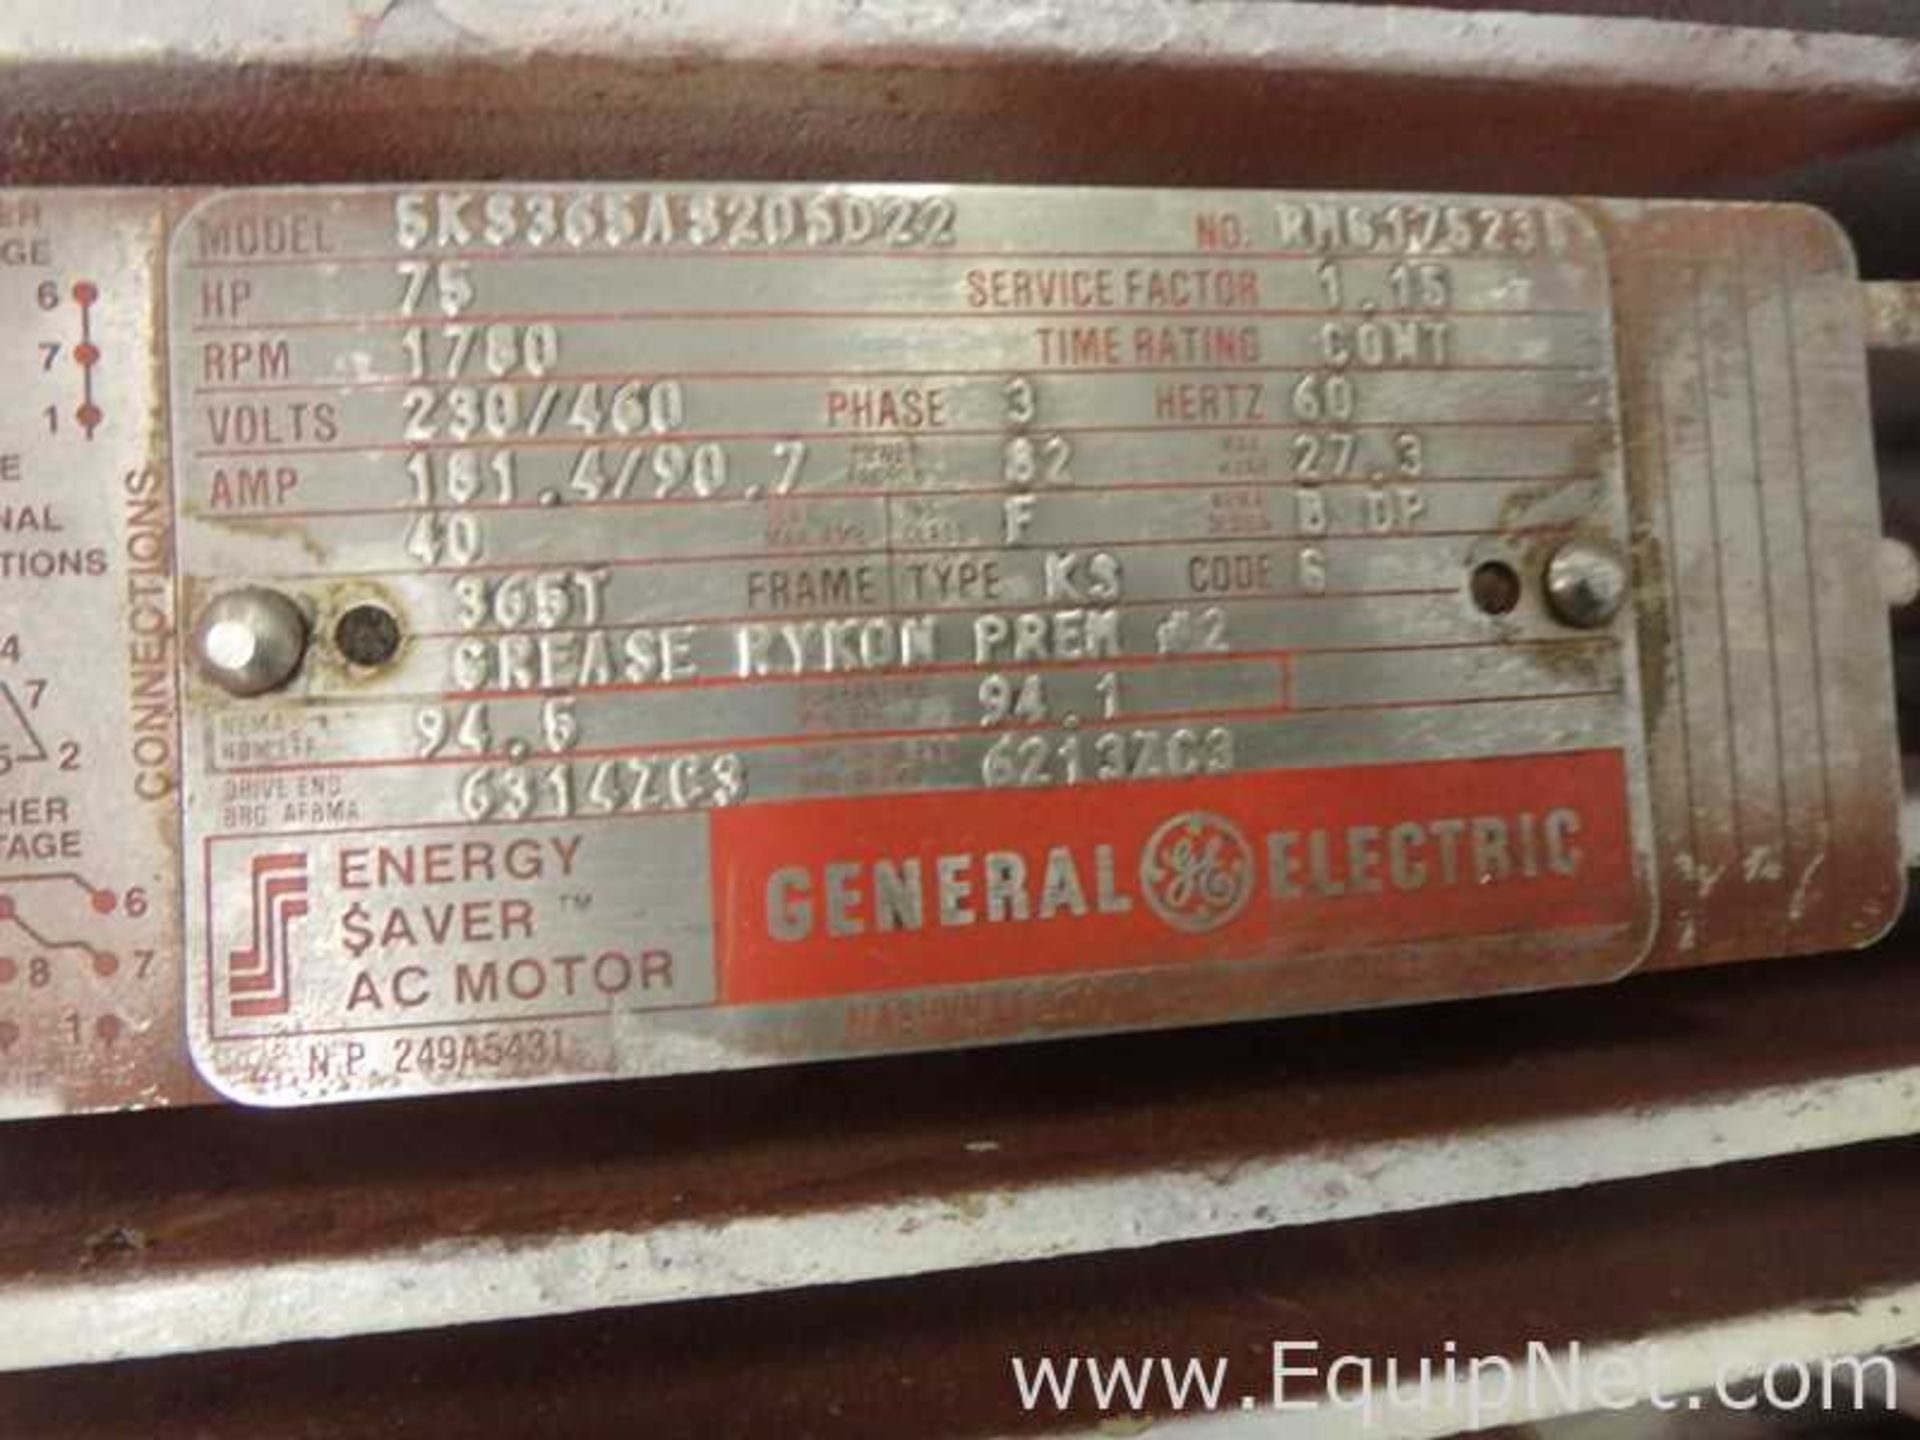 General Electric 5KS365AS205D22 75 HP 1780 RPM Motor Refurbished - Image 4 of 4